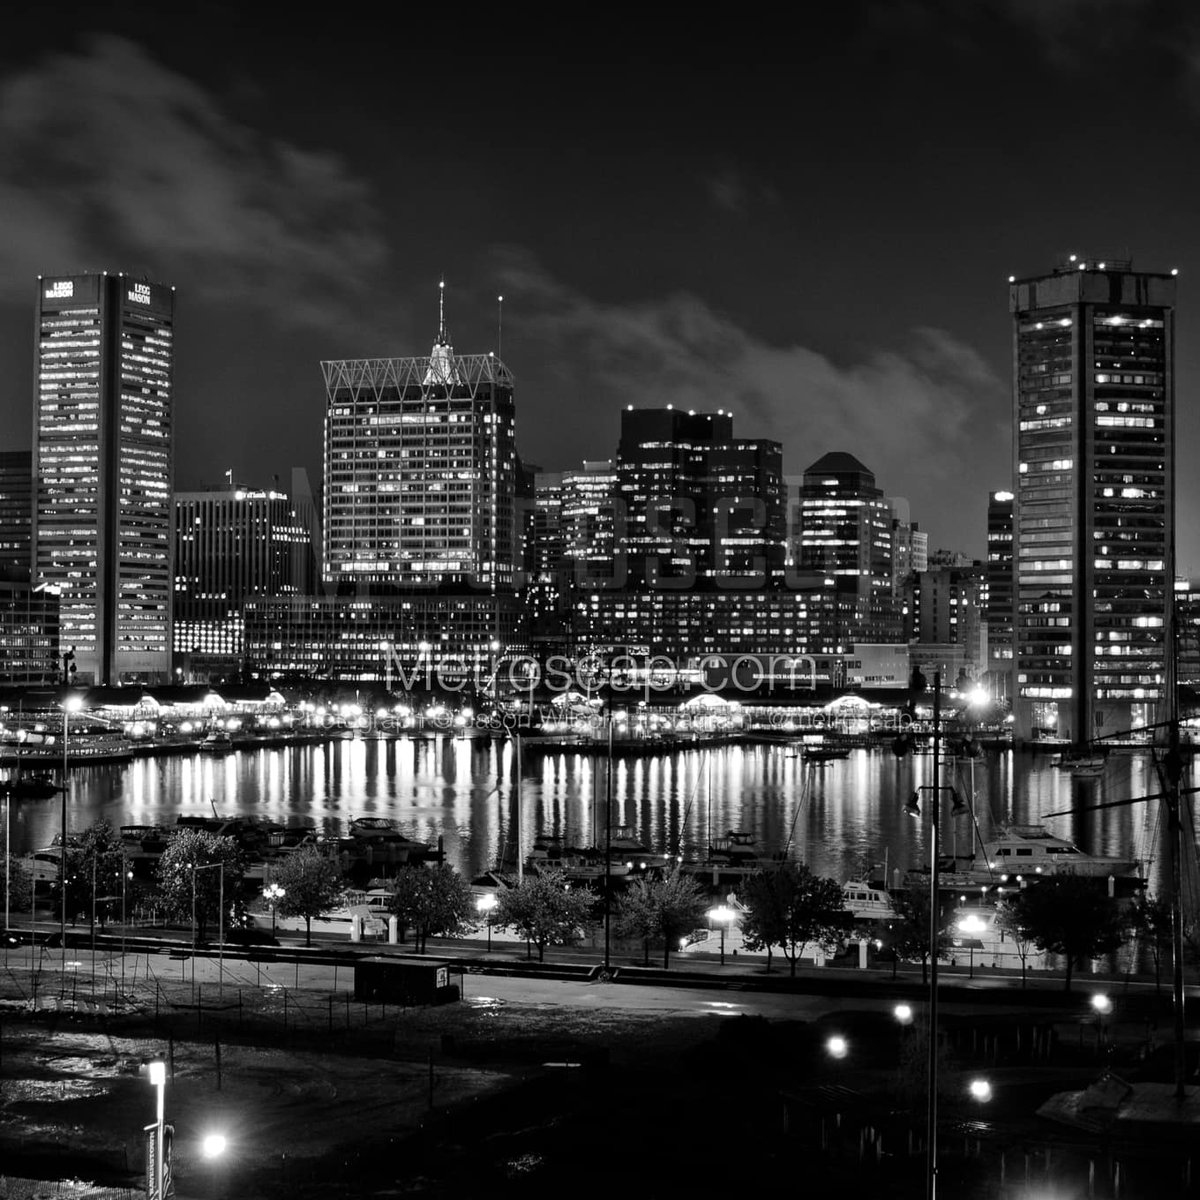 Baltimore pics Black & White: The Baltimore Skyline Over Looking the Inner Harbor from Federal Hill #baltimore #bmore #innerHarbor #camdenYards #maryland #410 #BlackWhite | metroscap.com/baltimore-land…